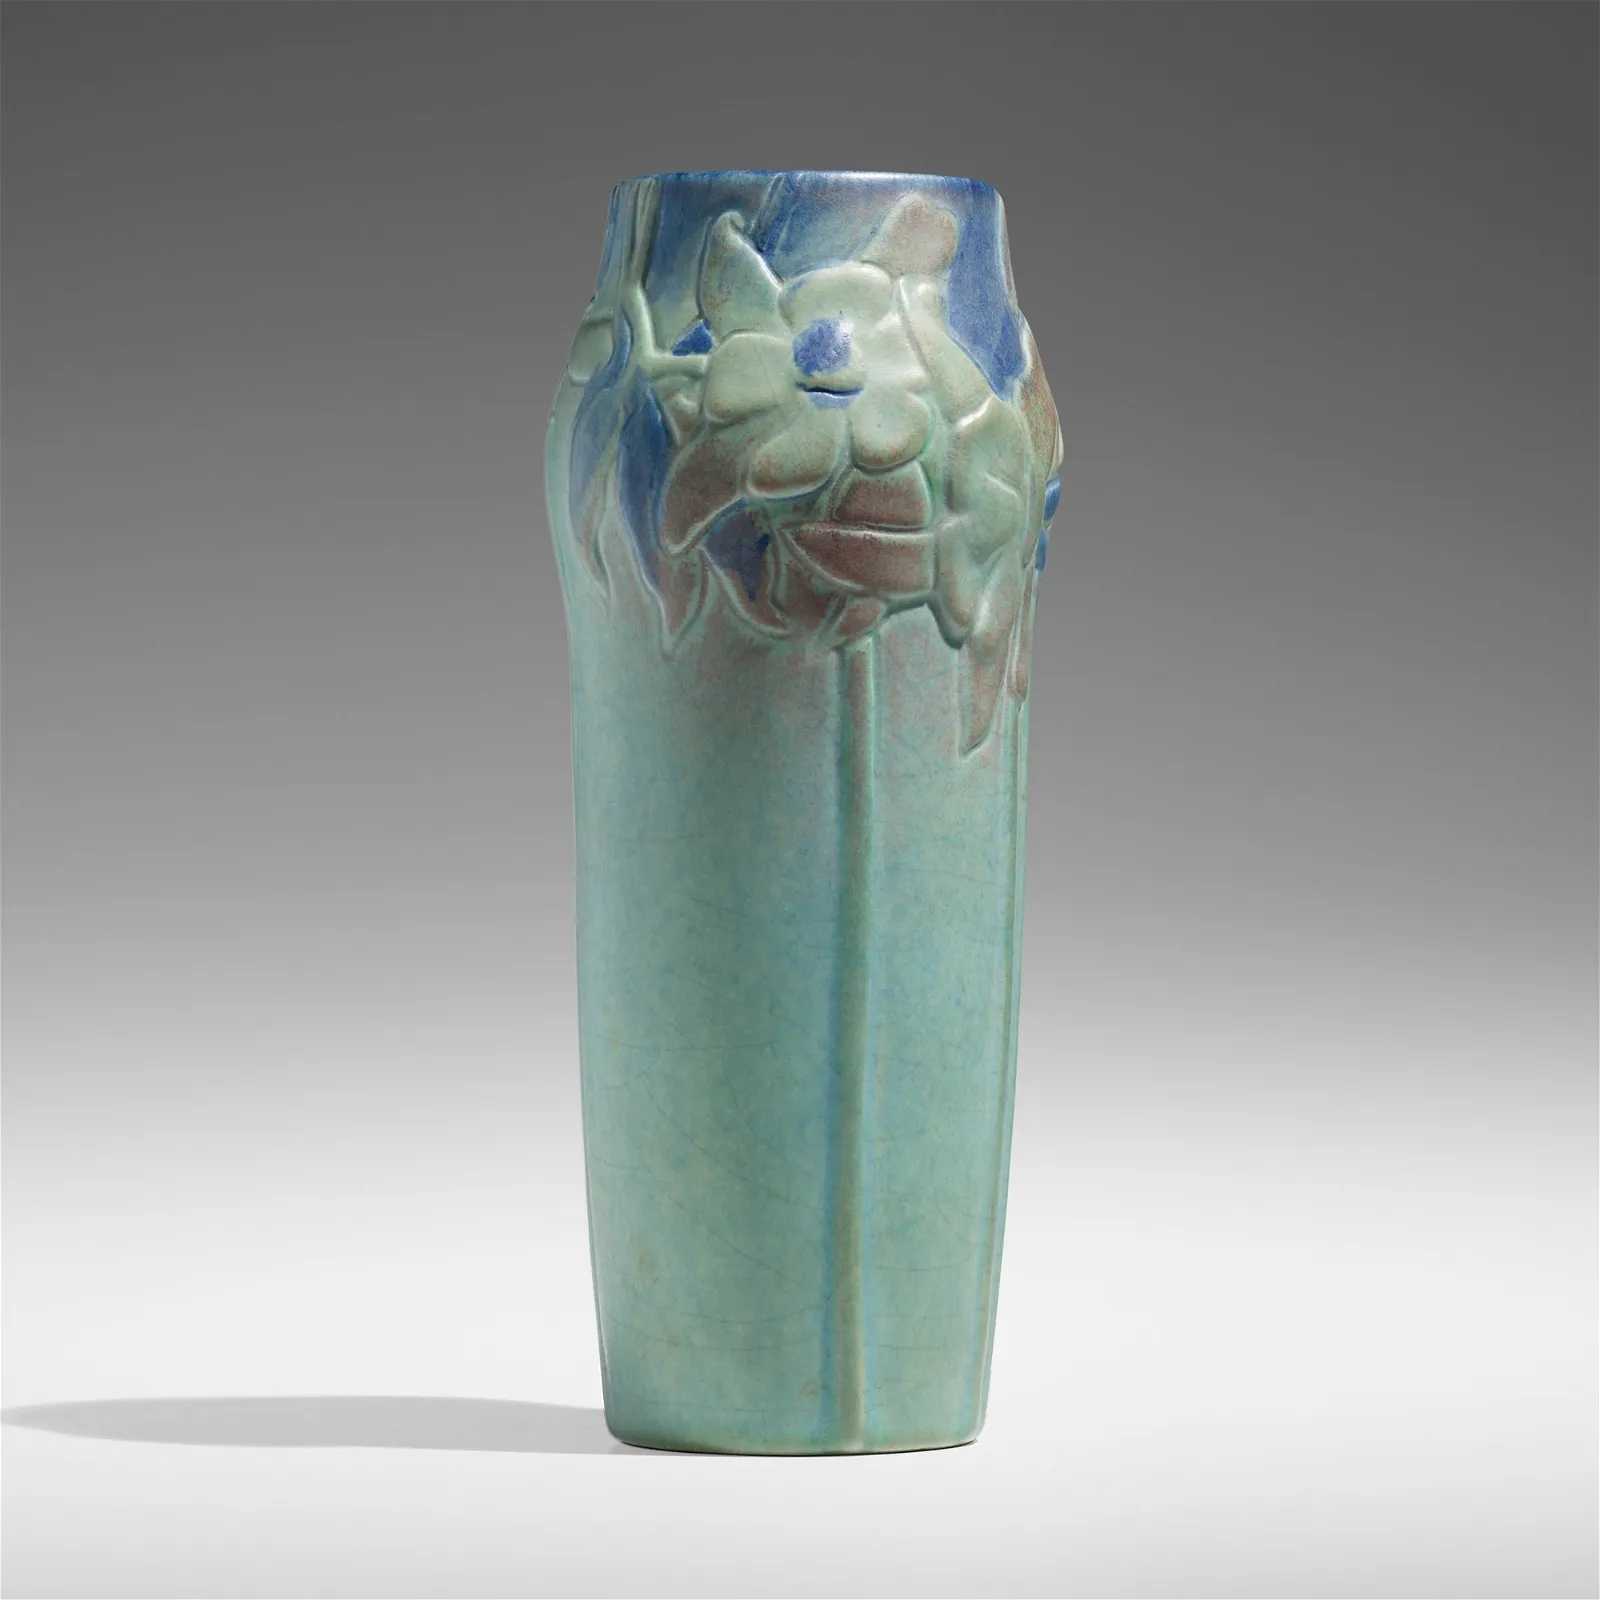 Artus Van Briggle for Van Briggle Pottery, four-color vase with columbine, estimated at $5,000-$7,000 at Rago.